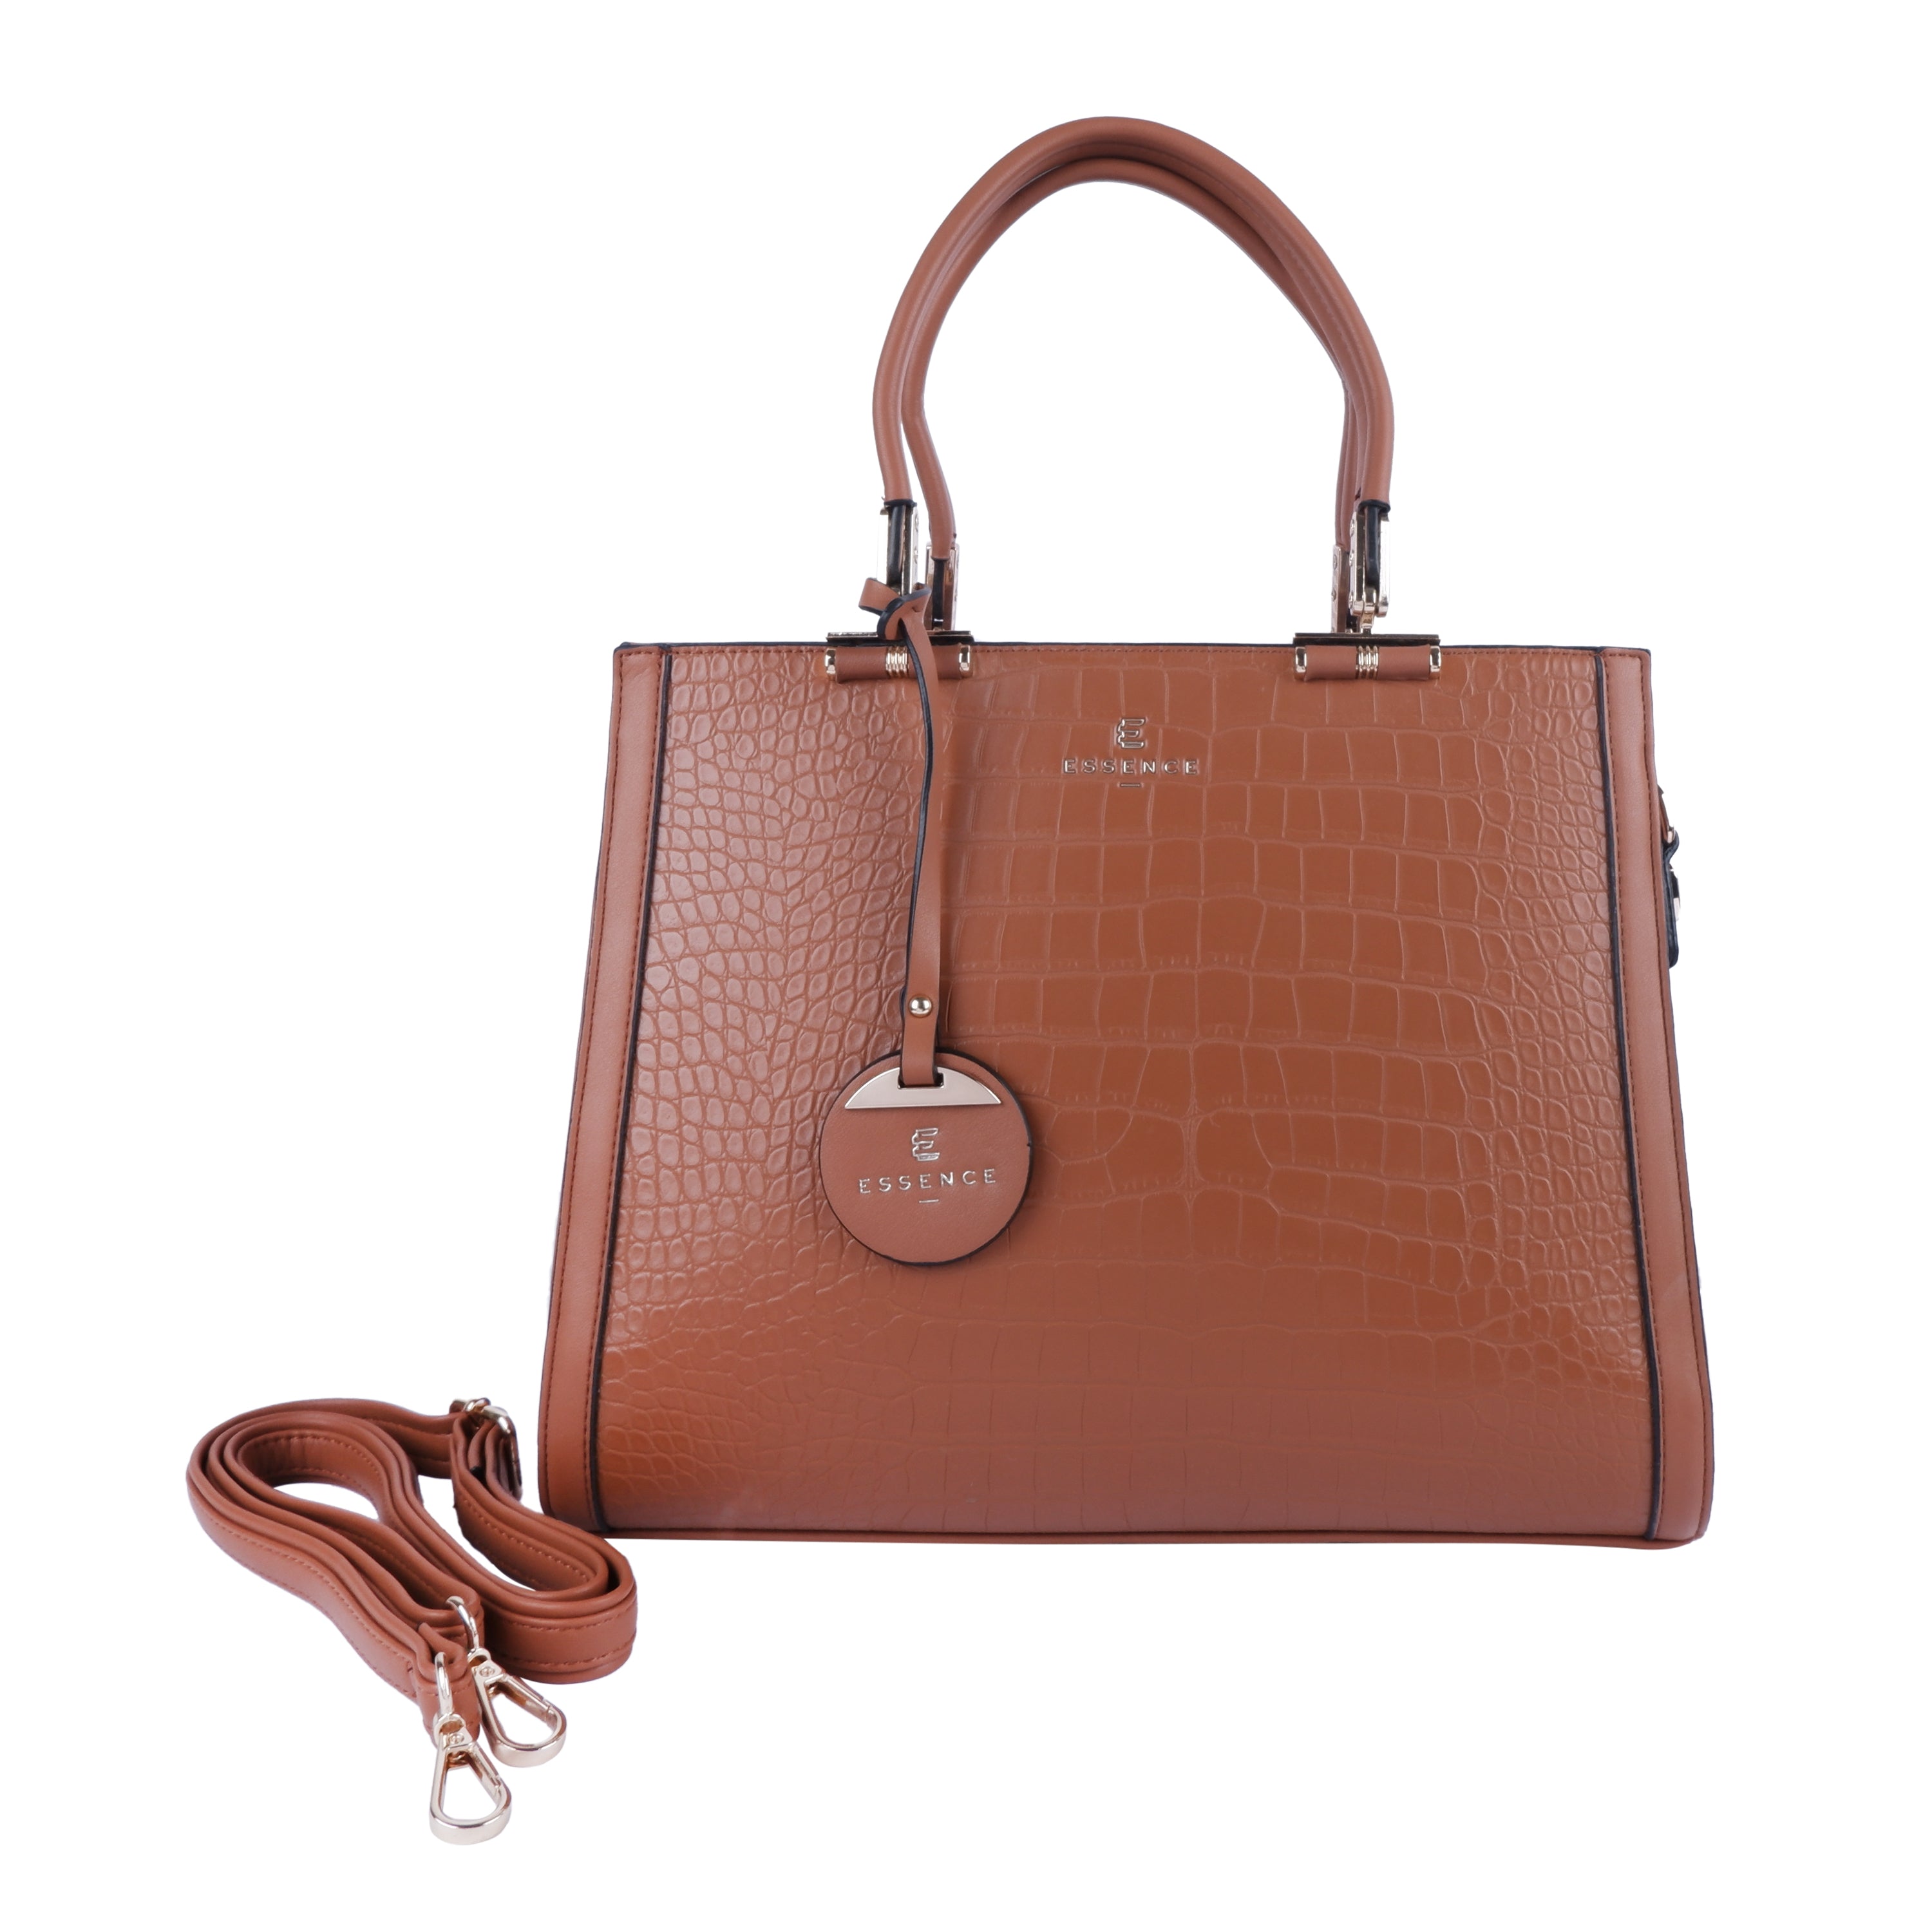 Buy Blue Handbags for Women by Lavie Online | Ajio.com